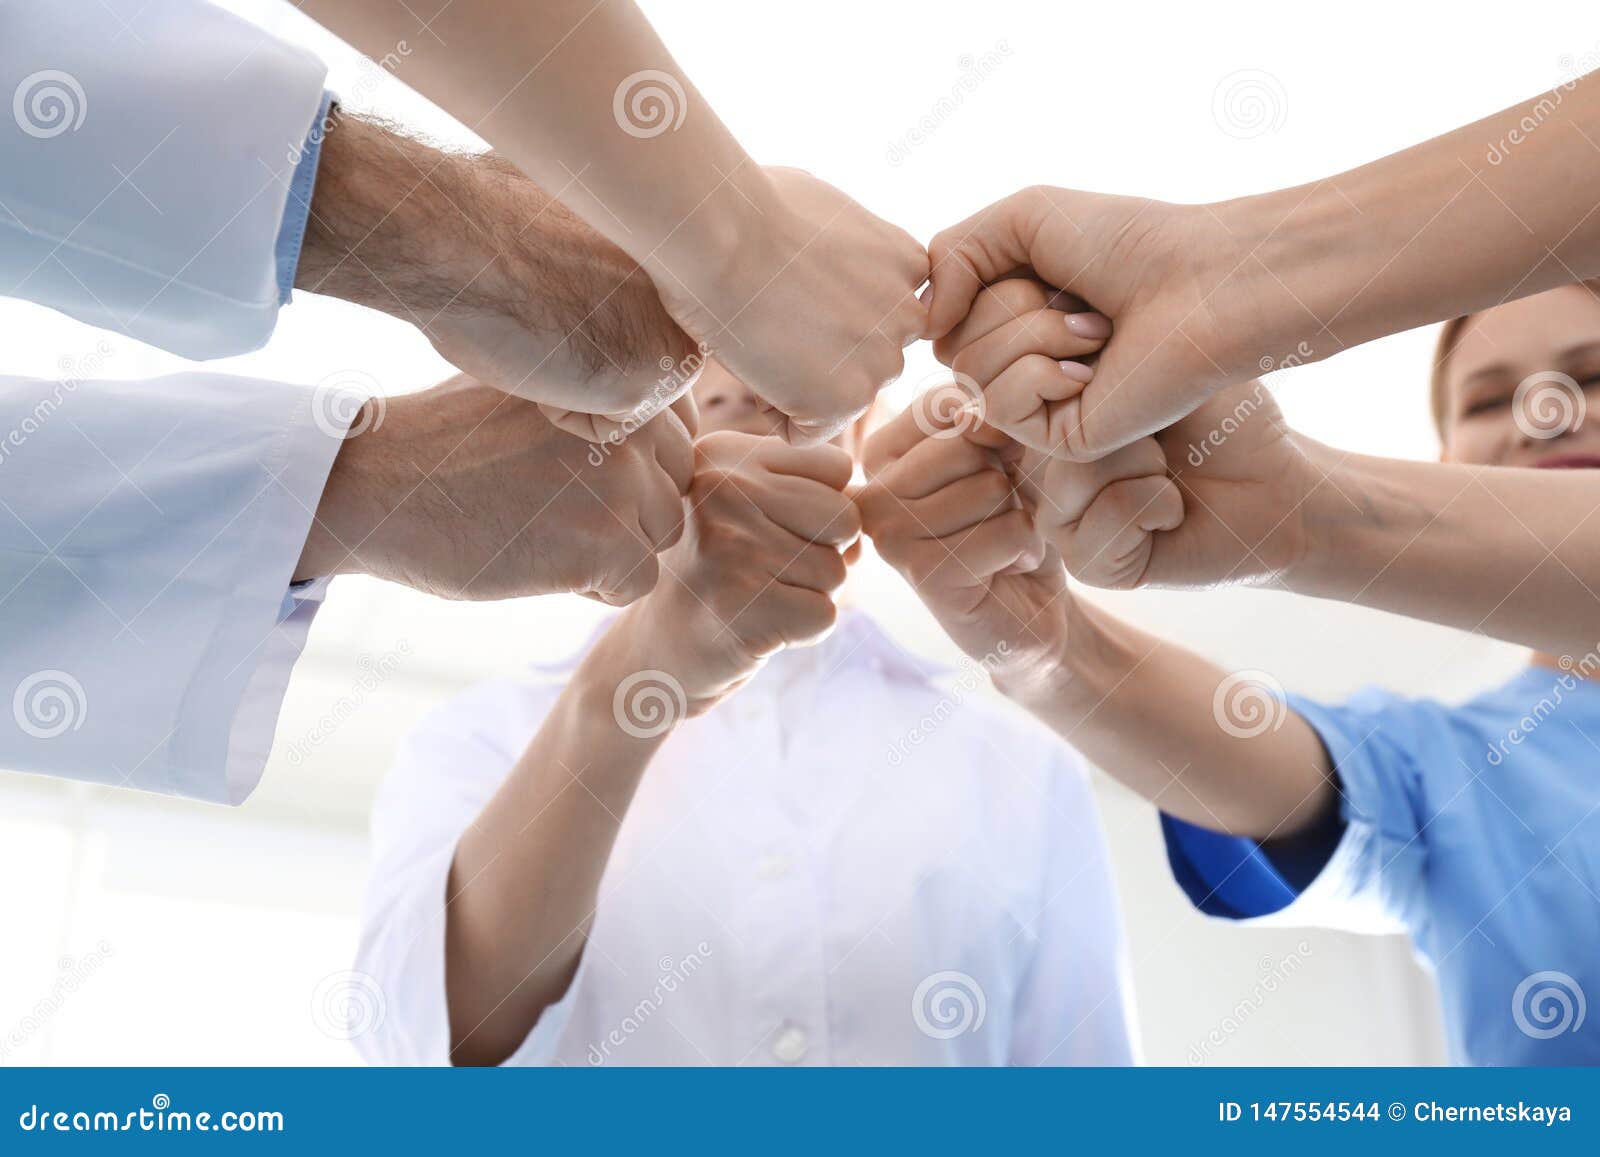 team of medical doctors putting hands together on light background. unity concept